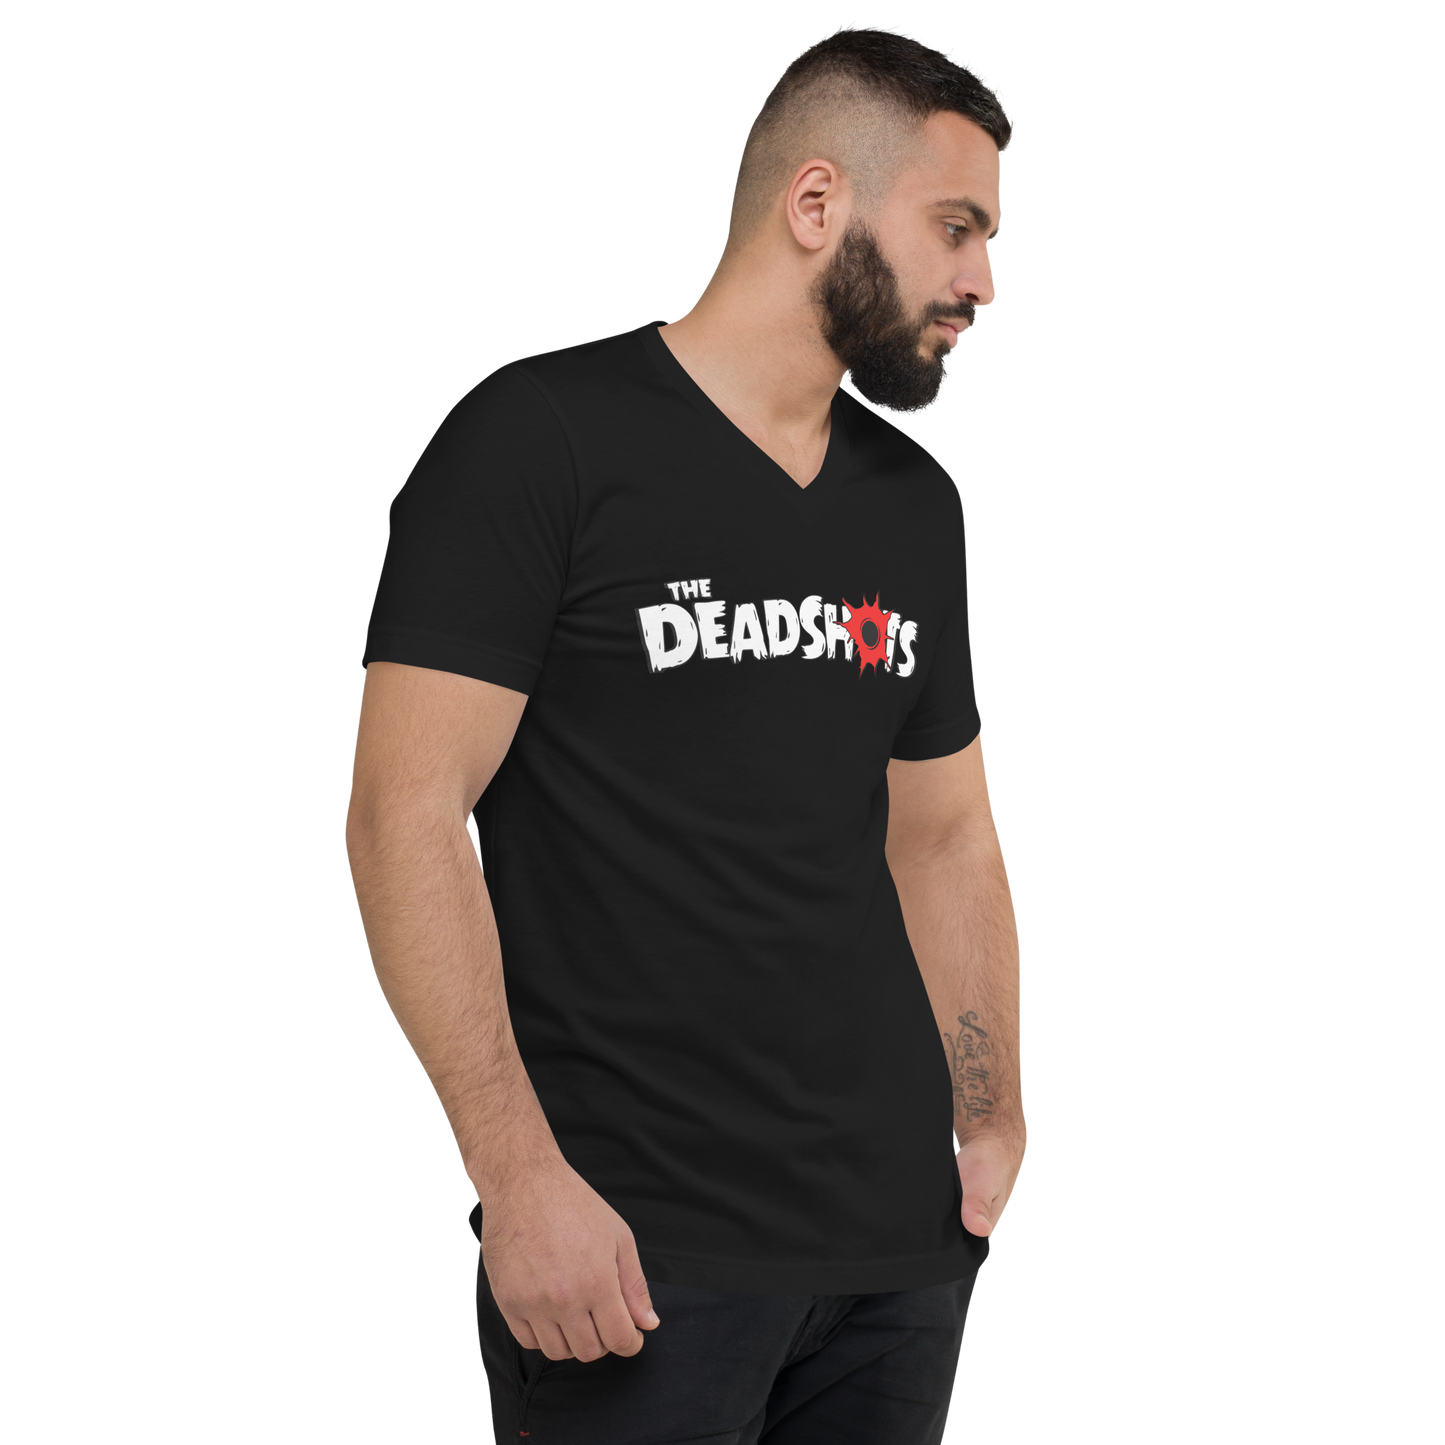 DeadShots V-Neck Unisex T-Shirt